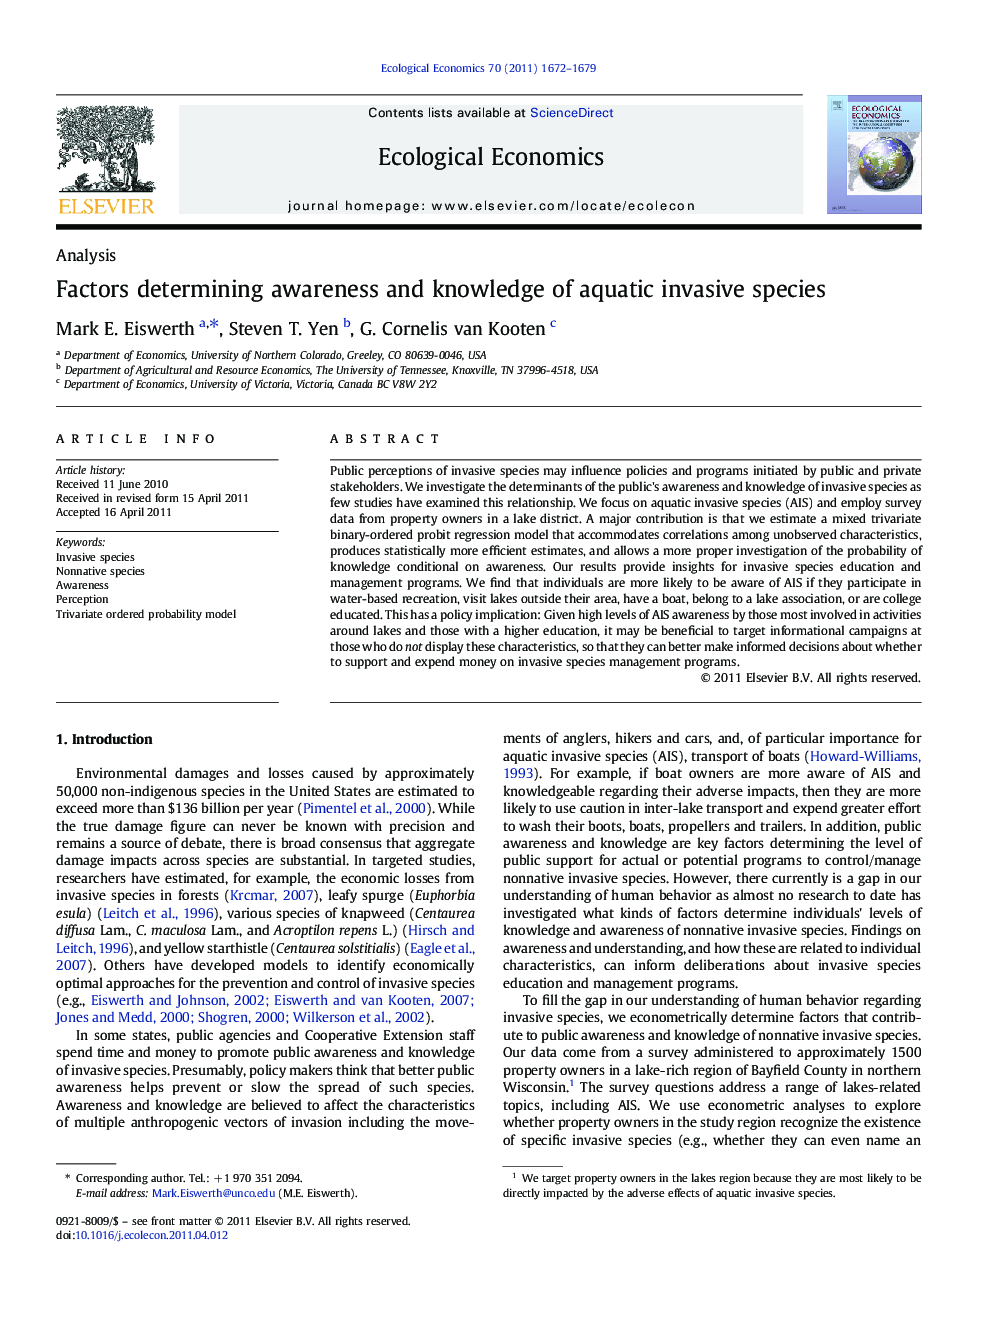 Factors determining awareness and knowledge of aquatic invasive species